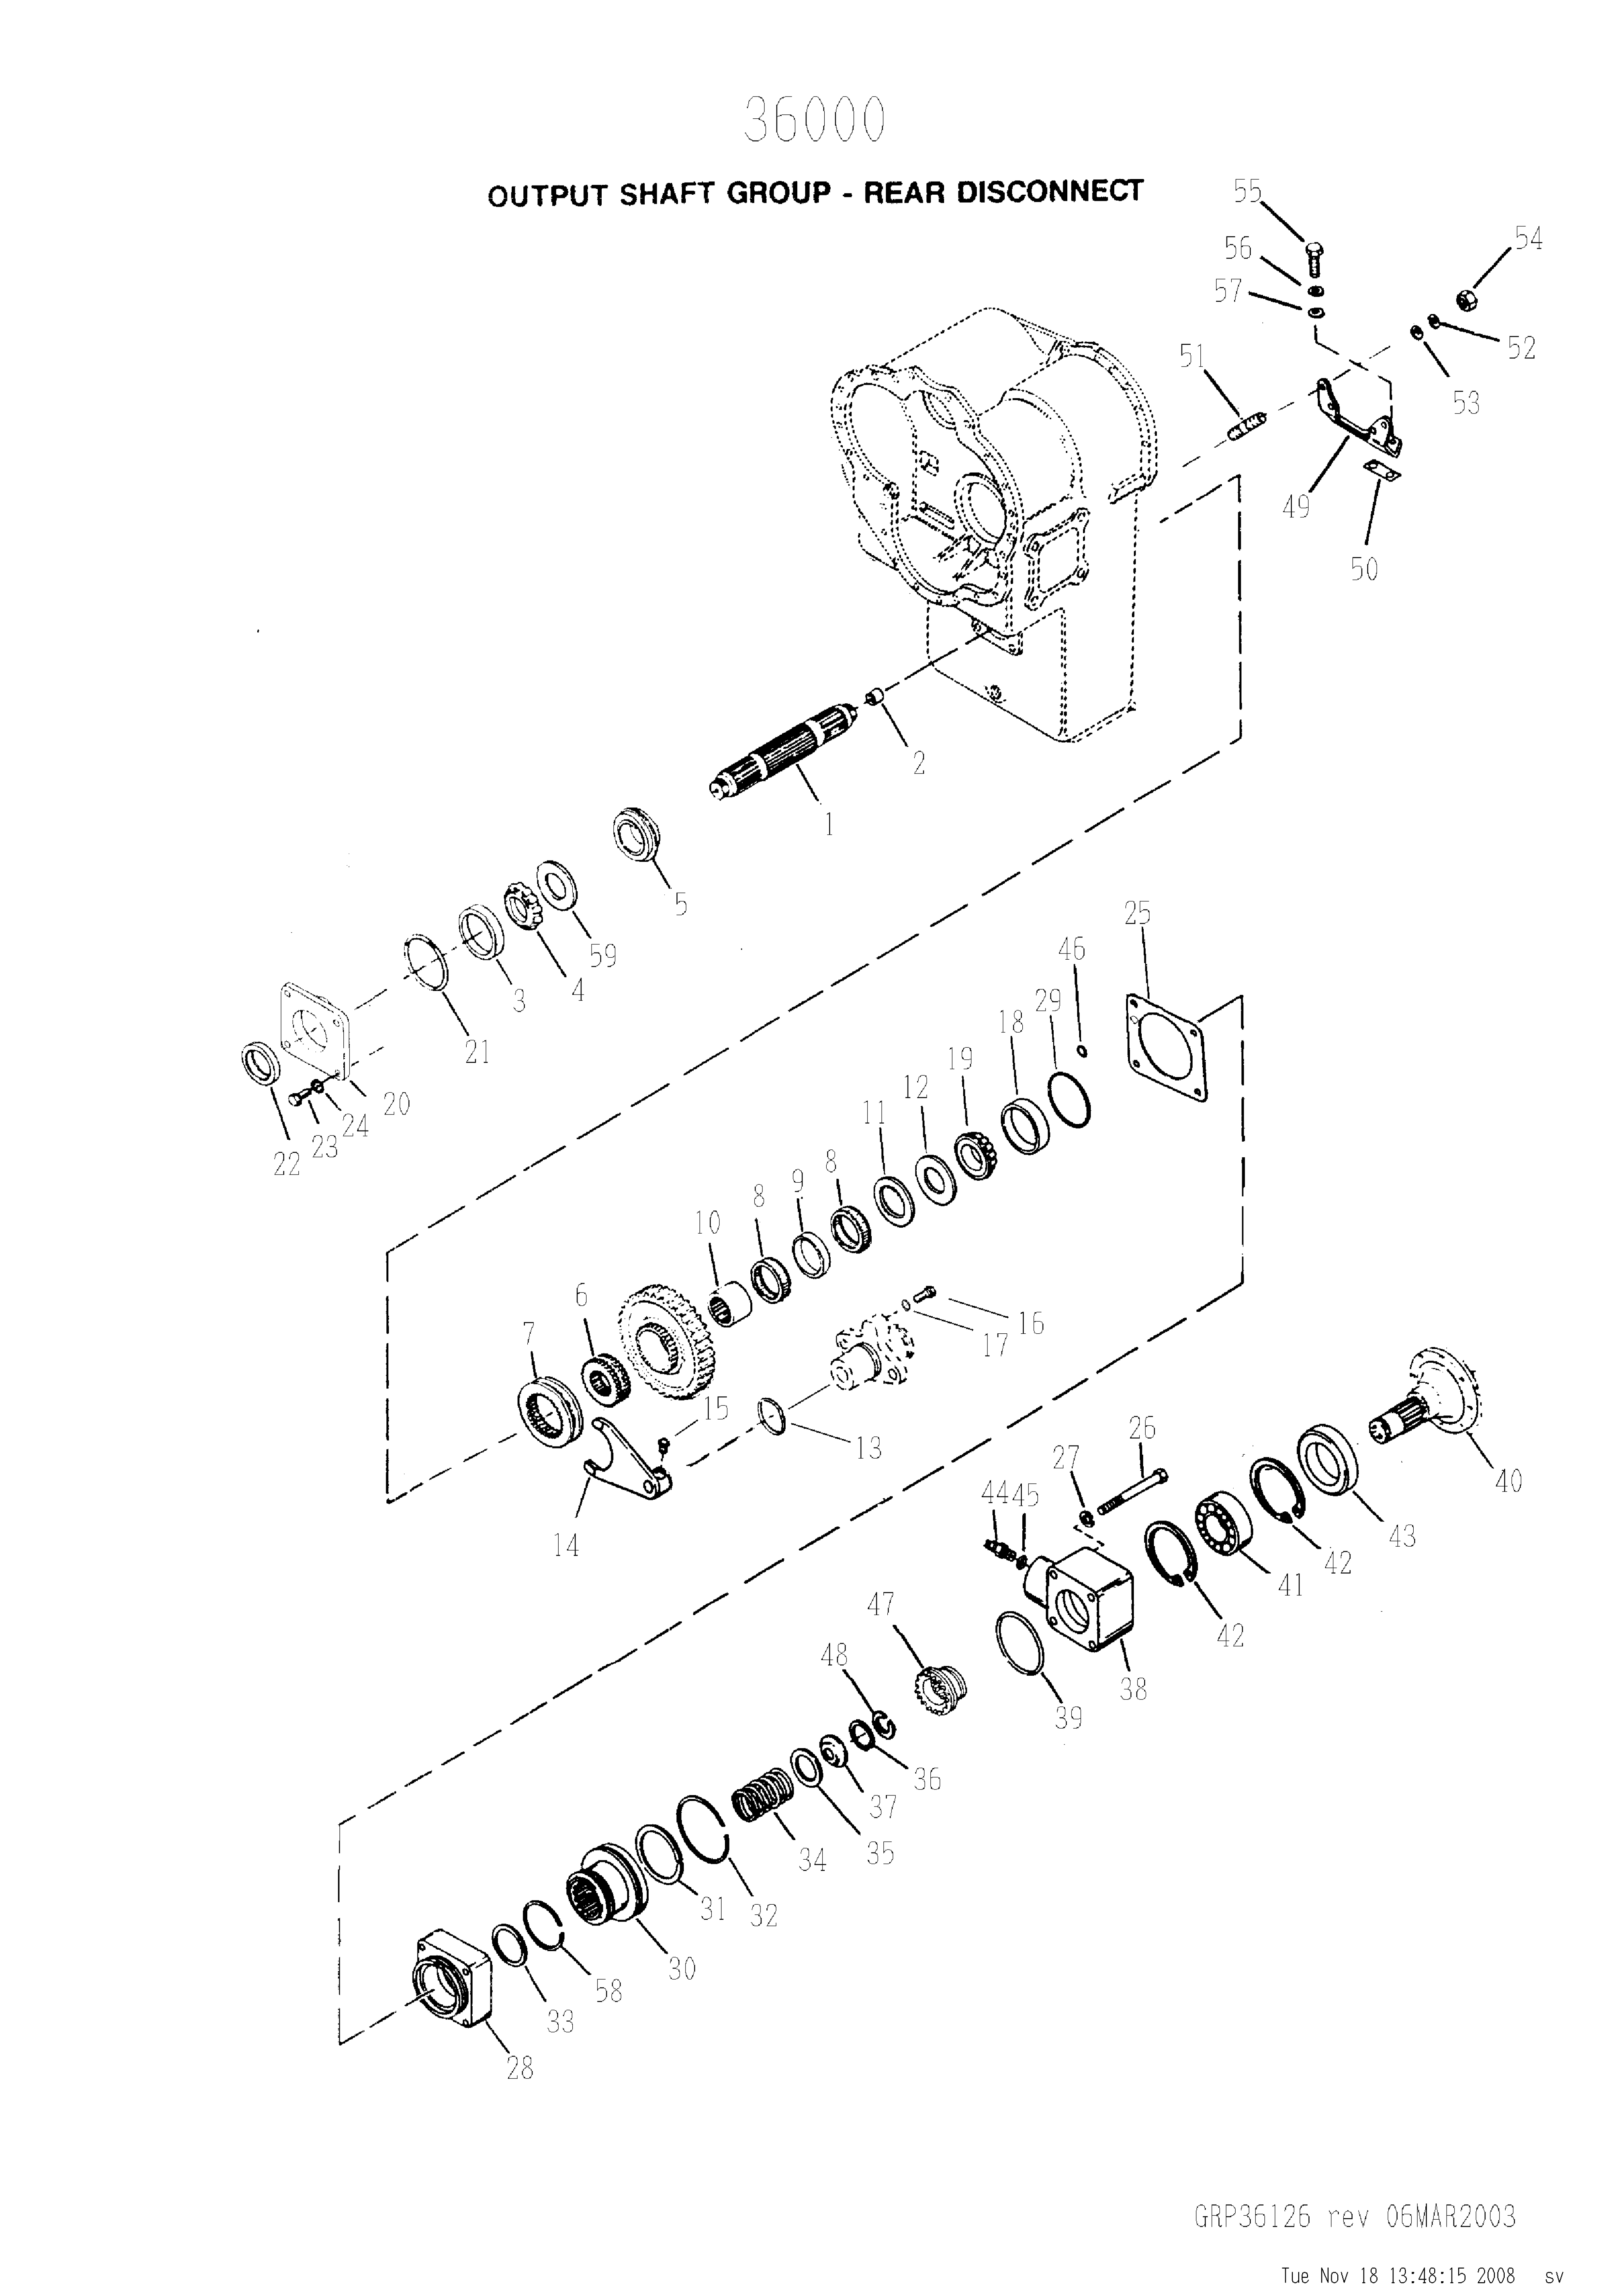 drawing for SCHOEMA, SCHOETTLER MASCHINENFABRIK K24.000247 - PISTON RING (figure 4)